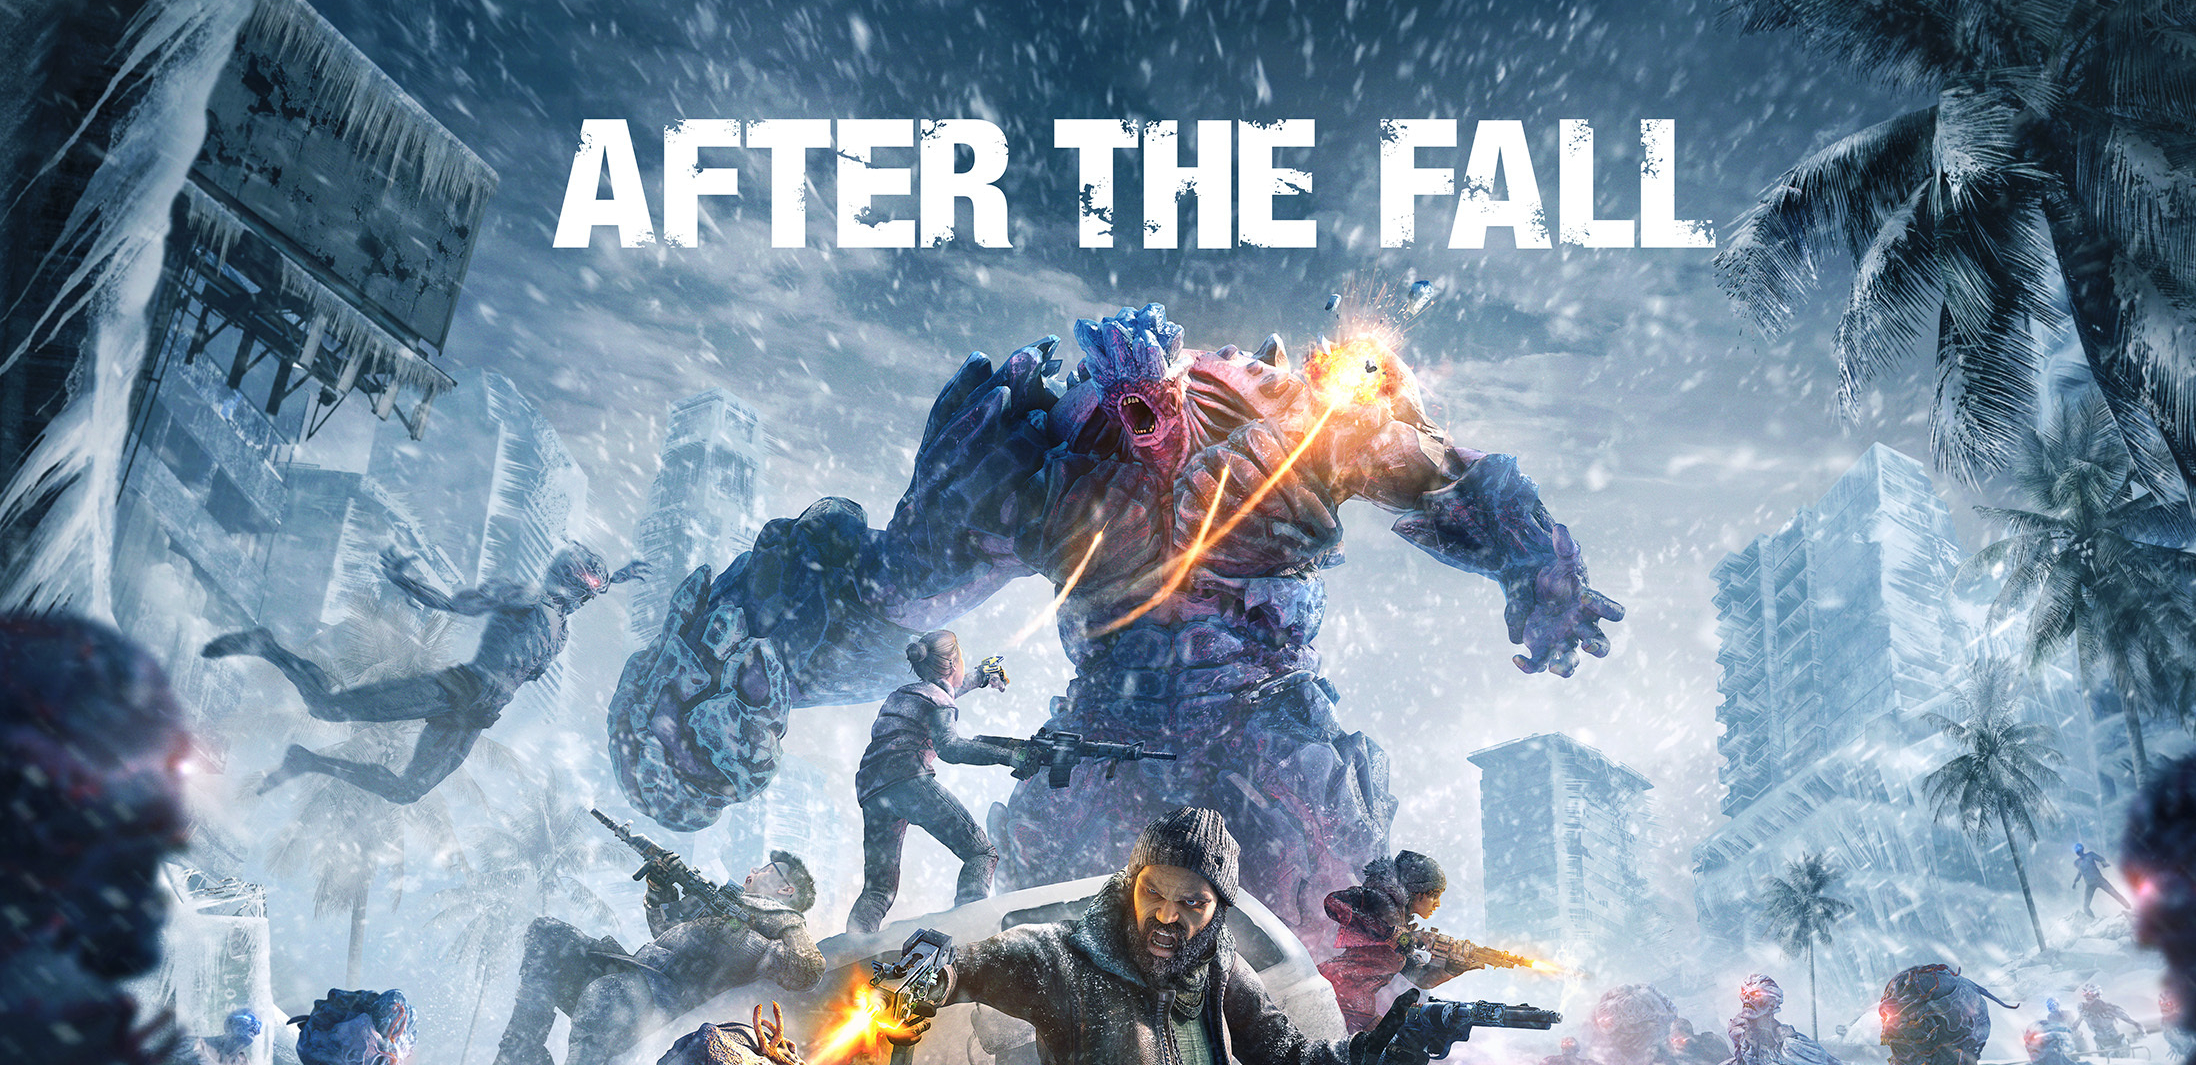 After the Fall is a 4-player co-op survival shooter from Vertigo Games